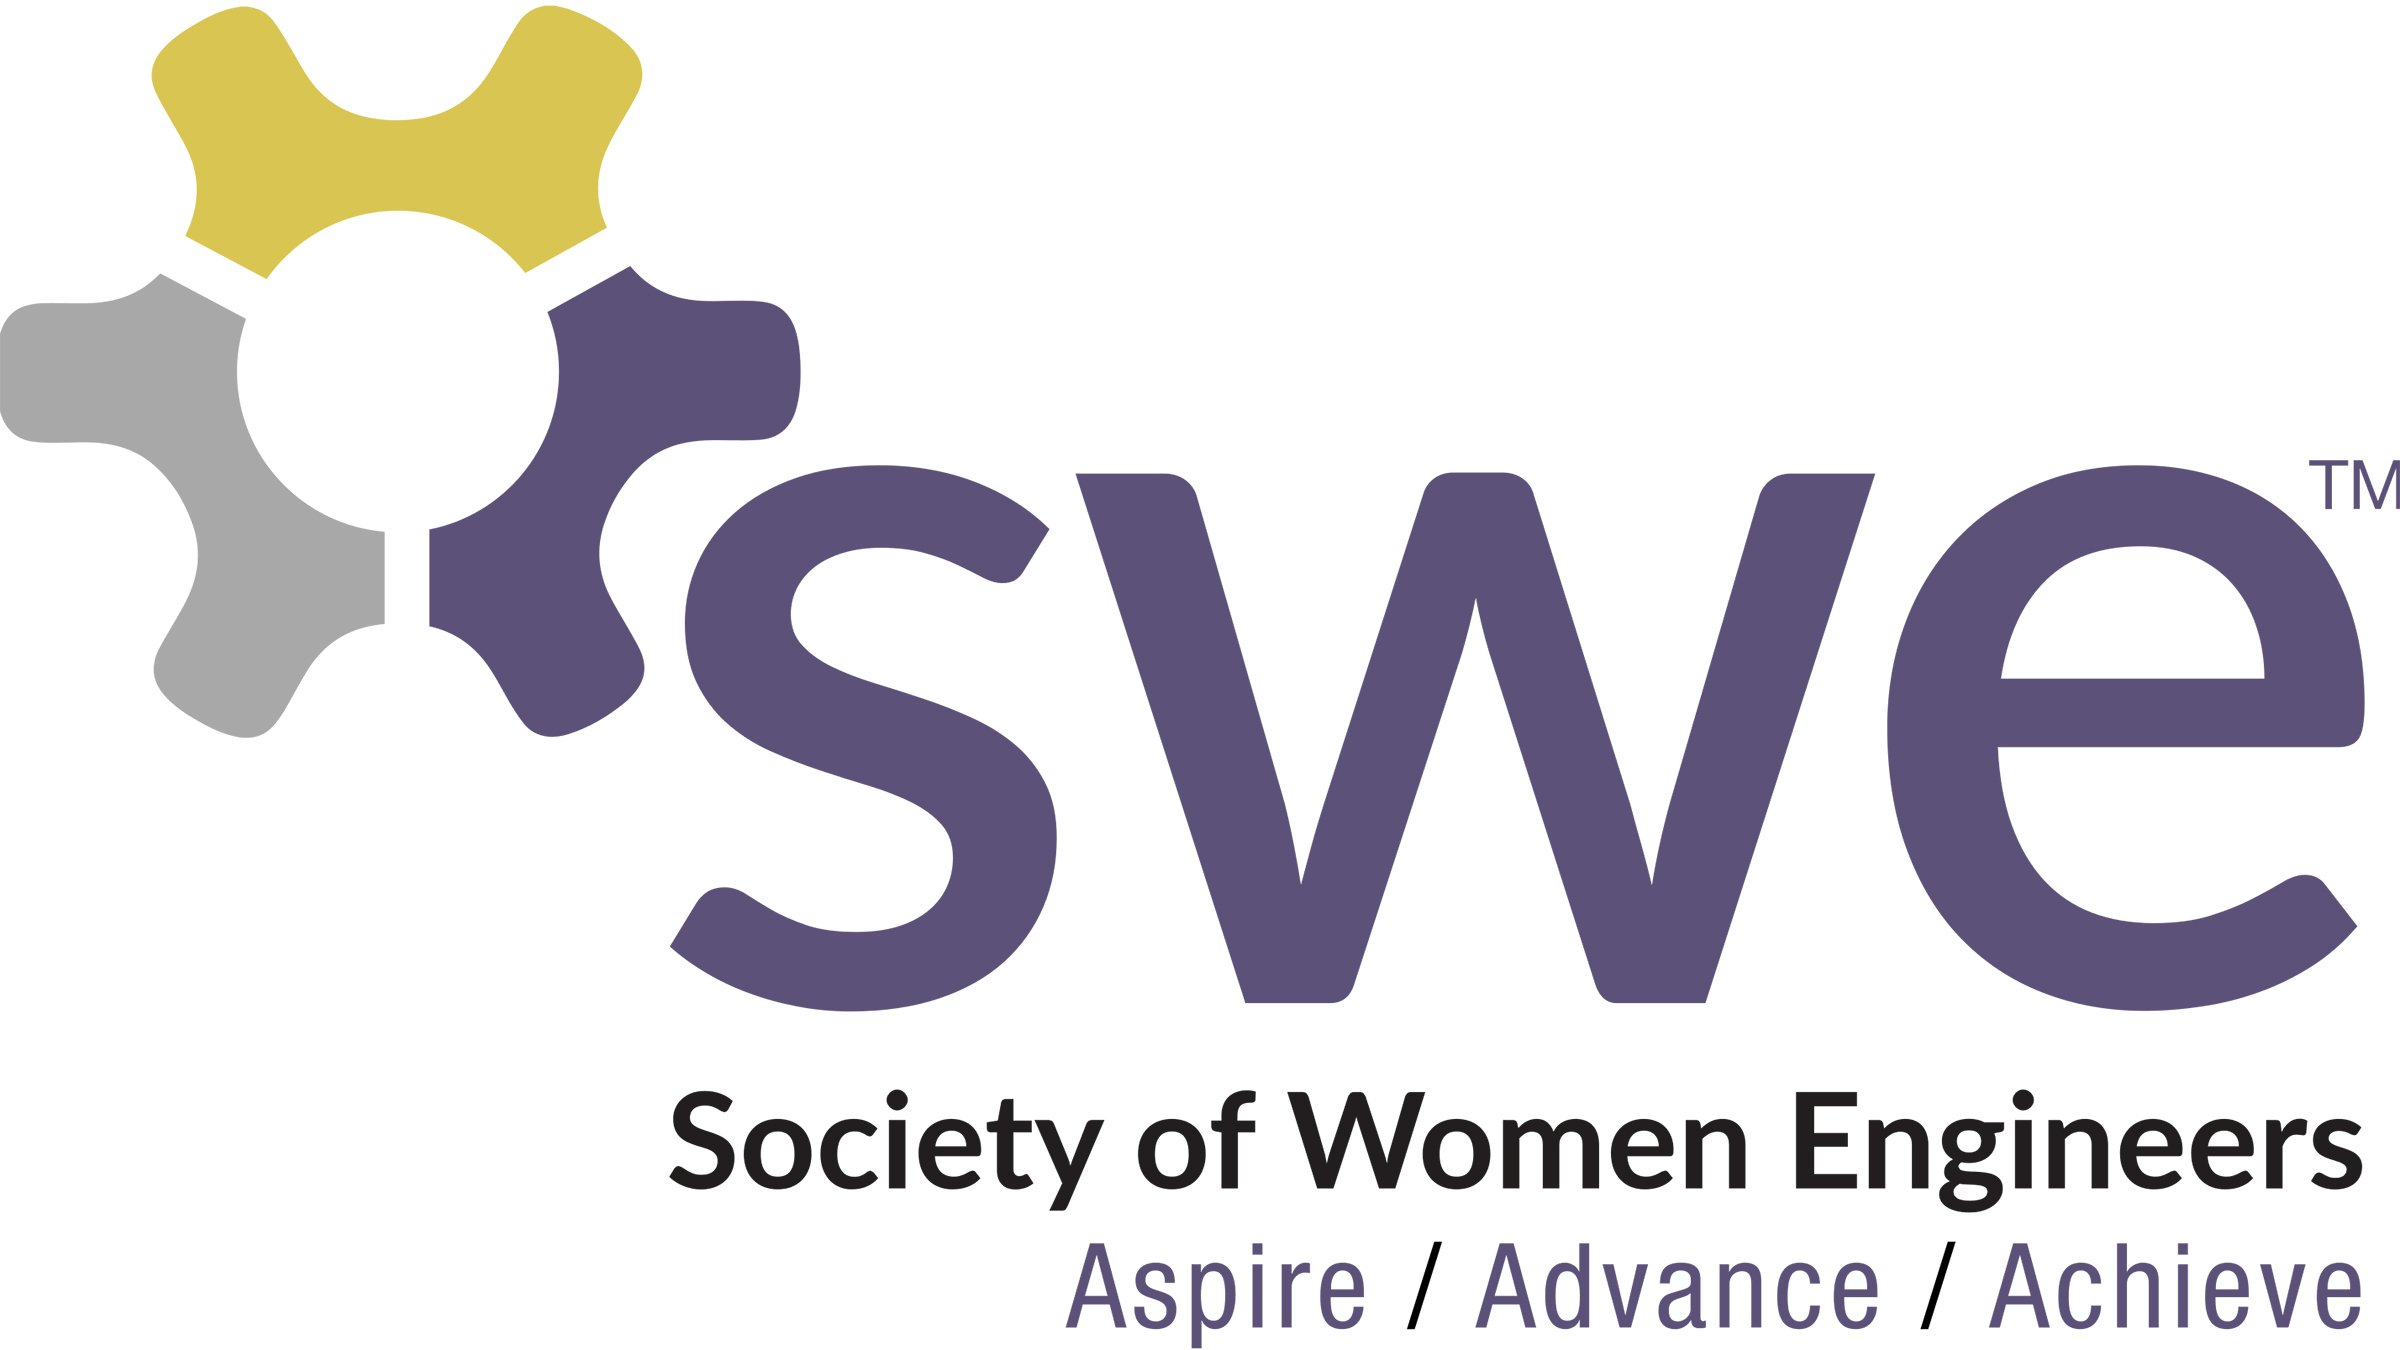 Society of Women Engineers logo